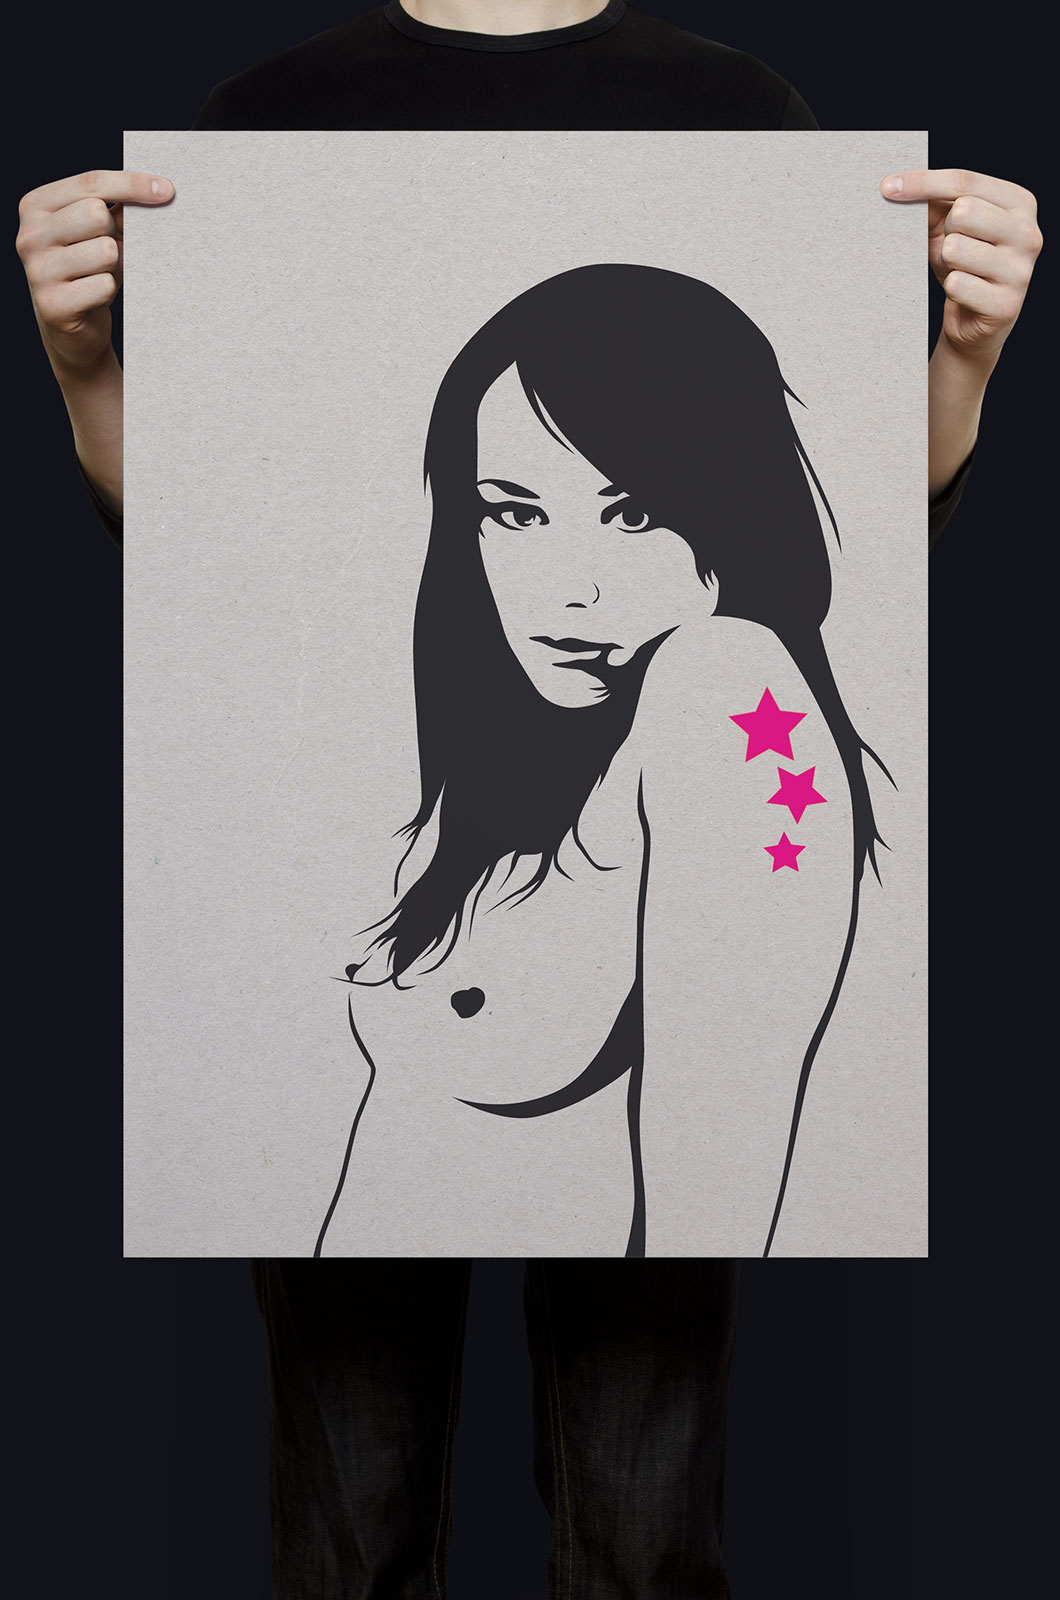 Alexander Glante - Works - Woman Stencil Illustrations - 02